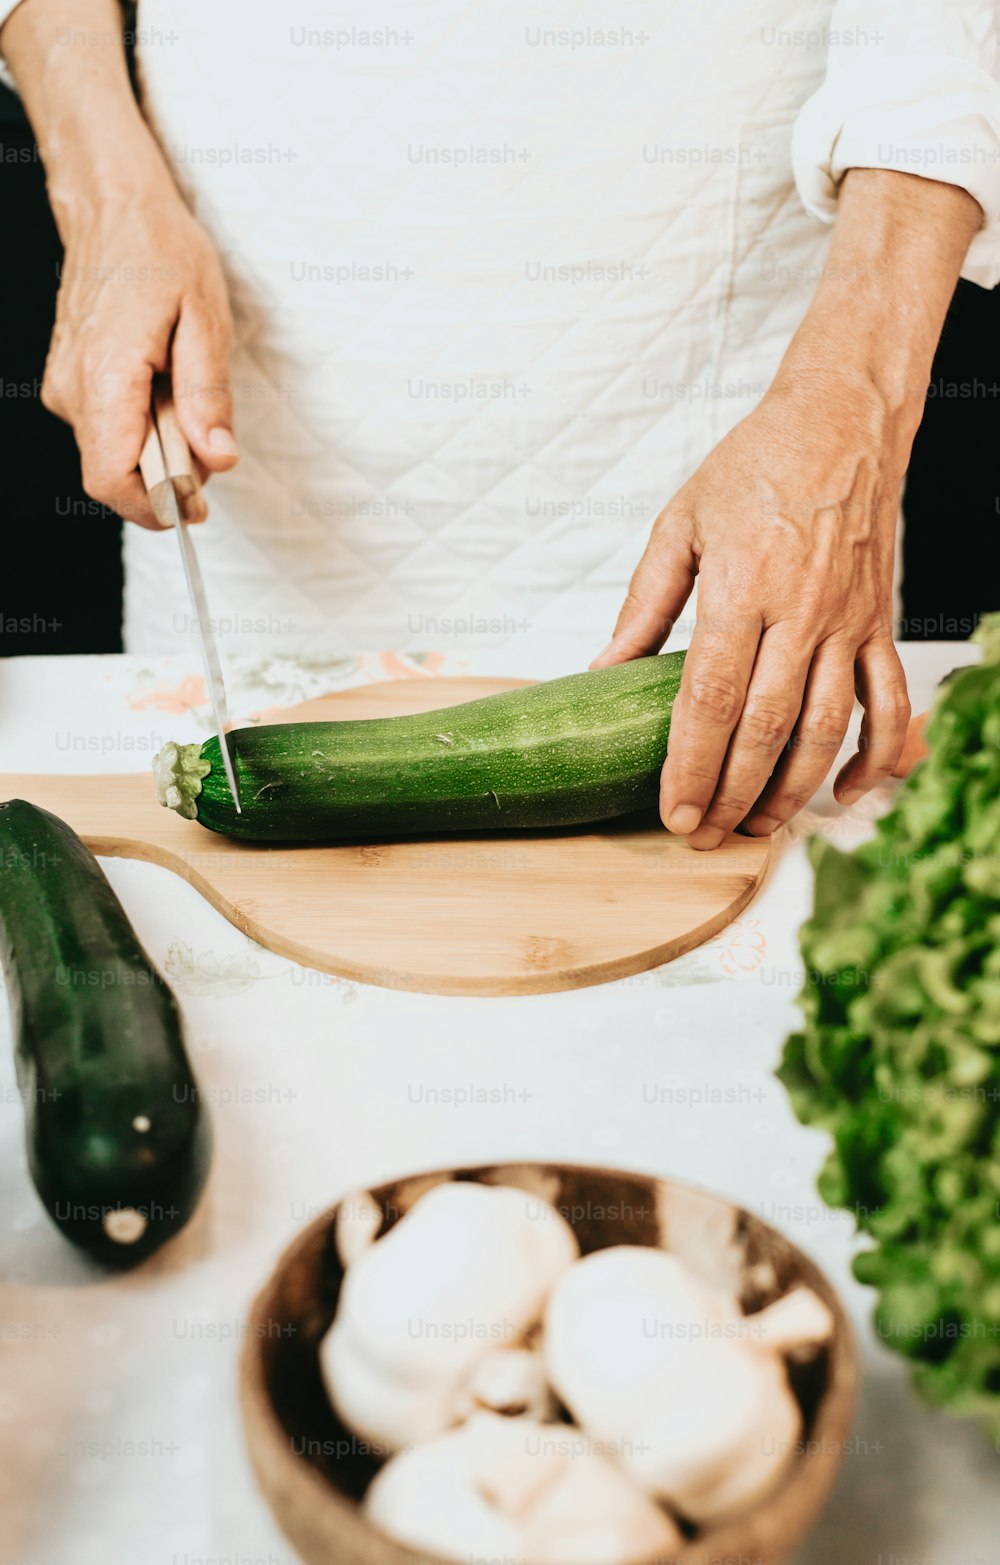 a person cutting up a cucumber on a cutting board